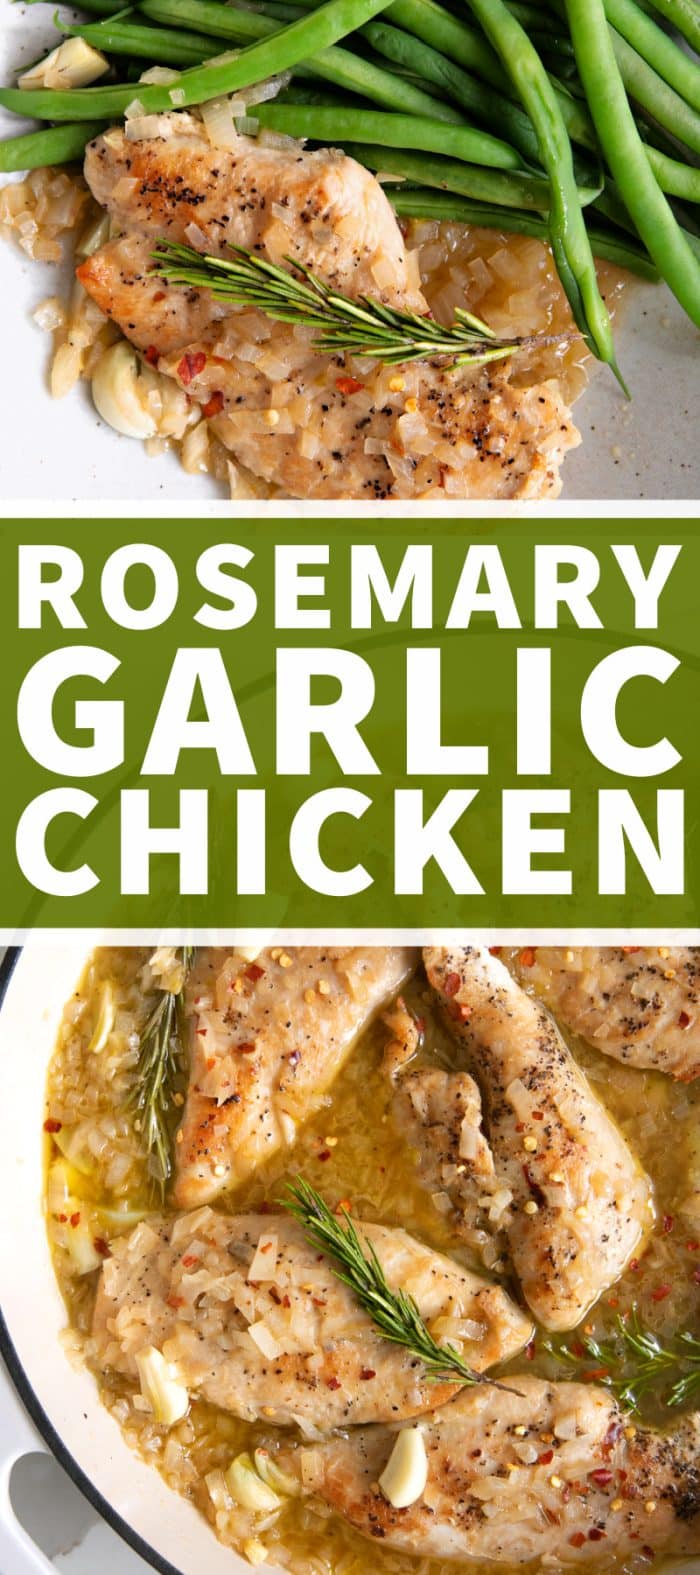 Rosemary Garlic Chicken Recipe pinterest pin collage image